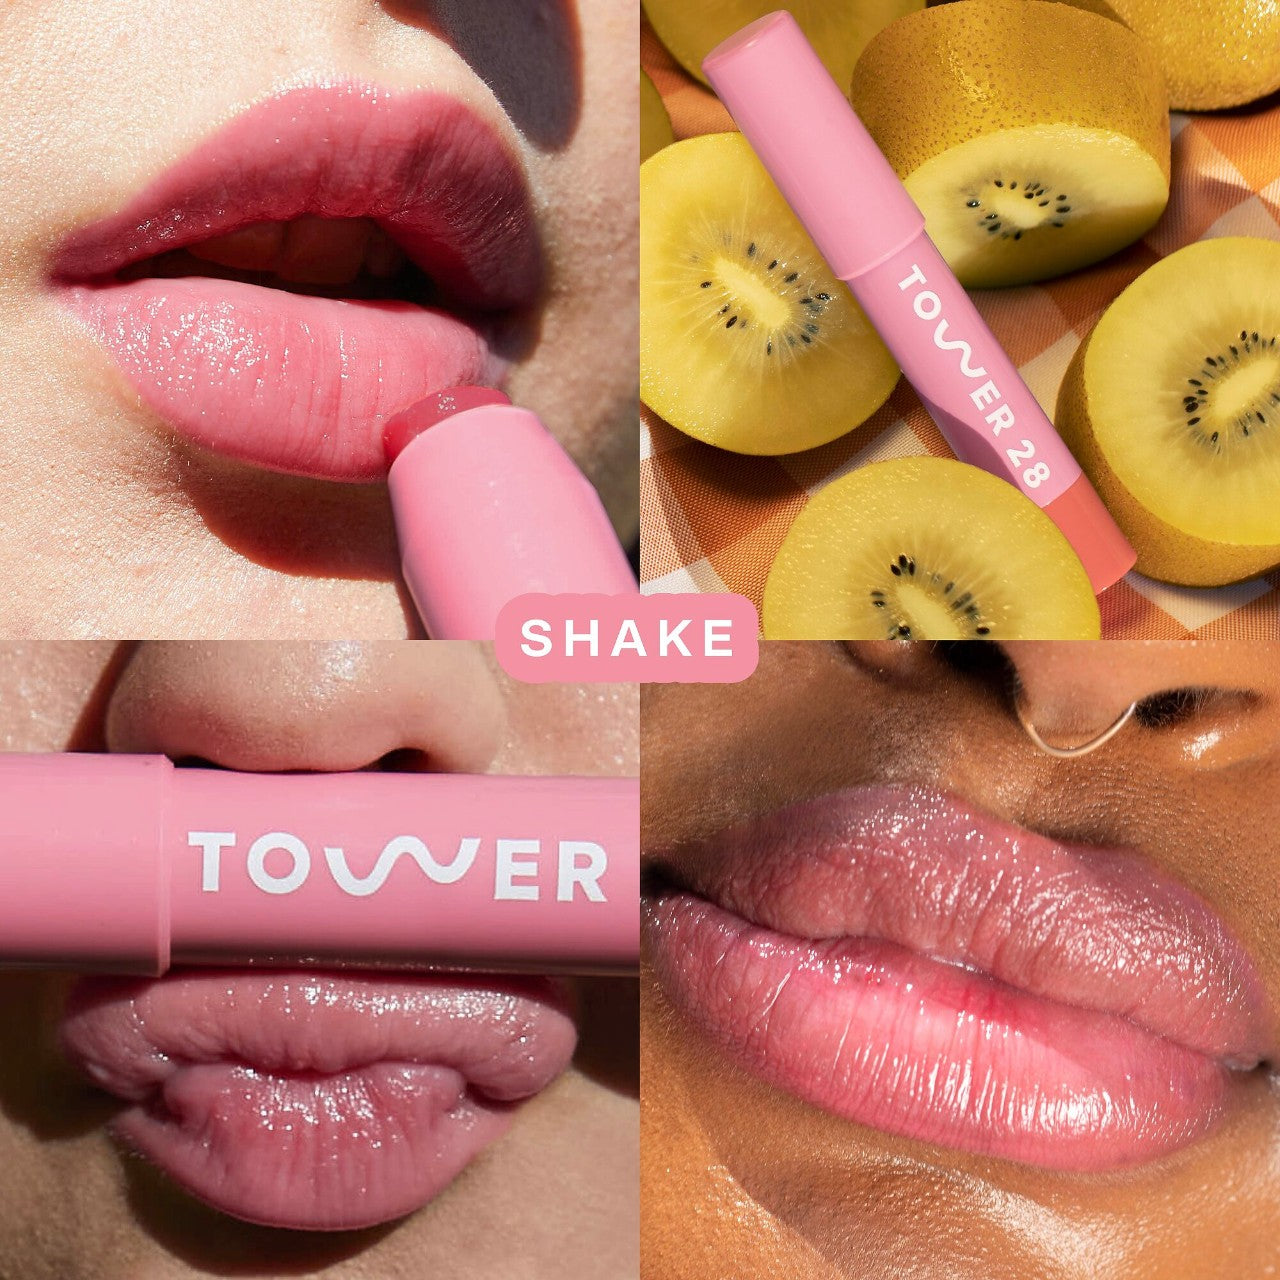 Tower 28 Beauty, JuiceBalm Vegan Tinted Lip Balm